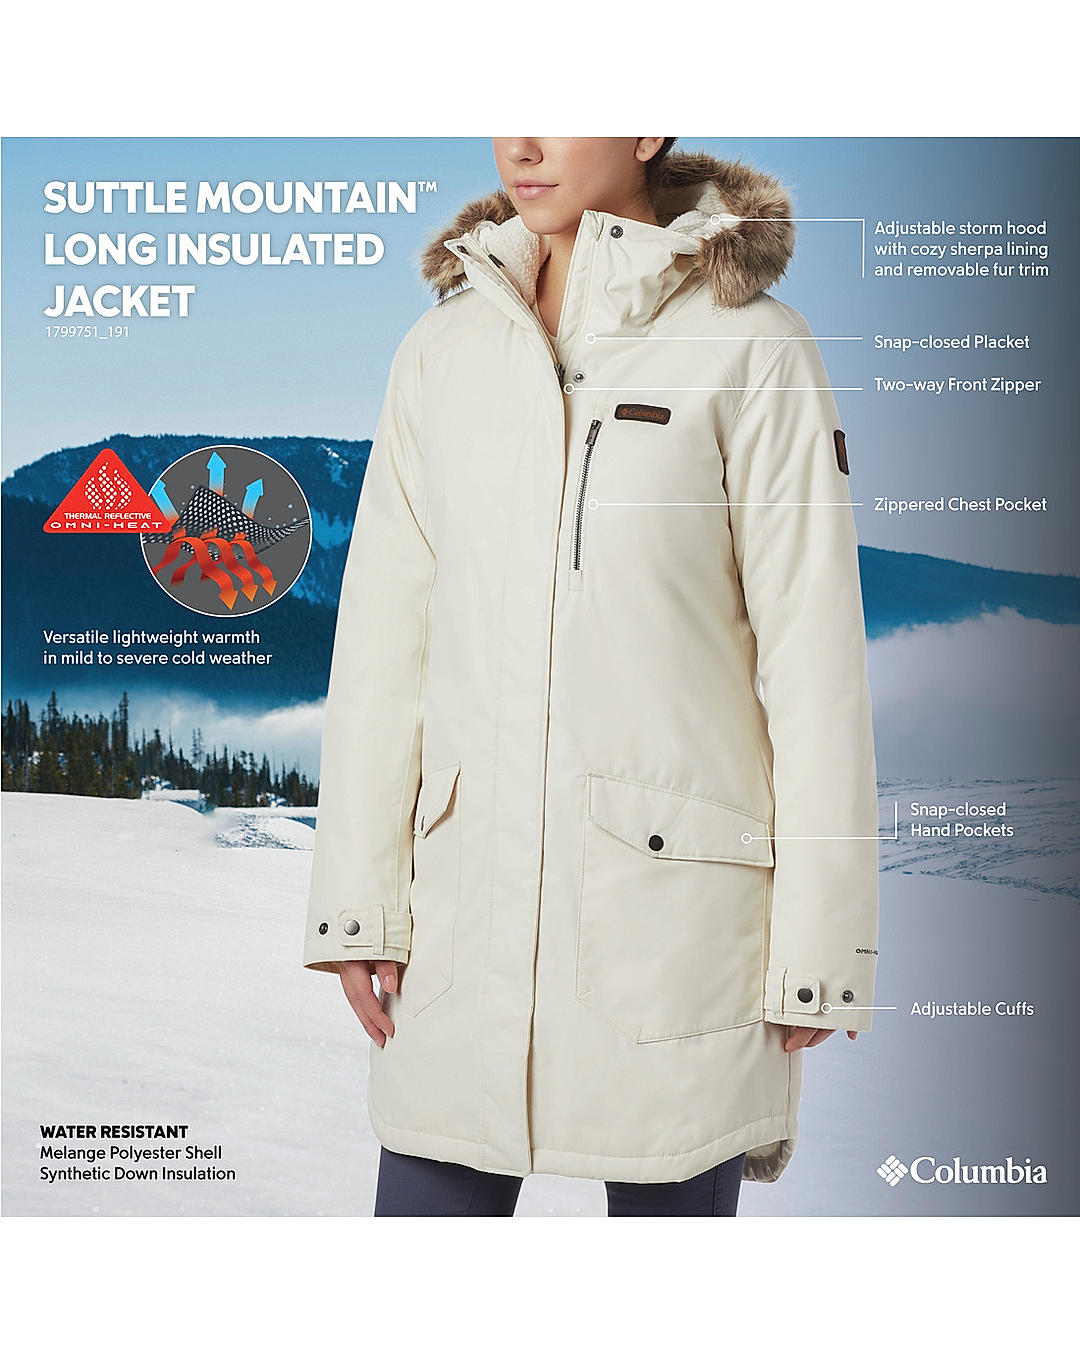 NWT Columbia Women's Suttle Mountain II Insulated Jacket - XXLarge - Black